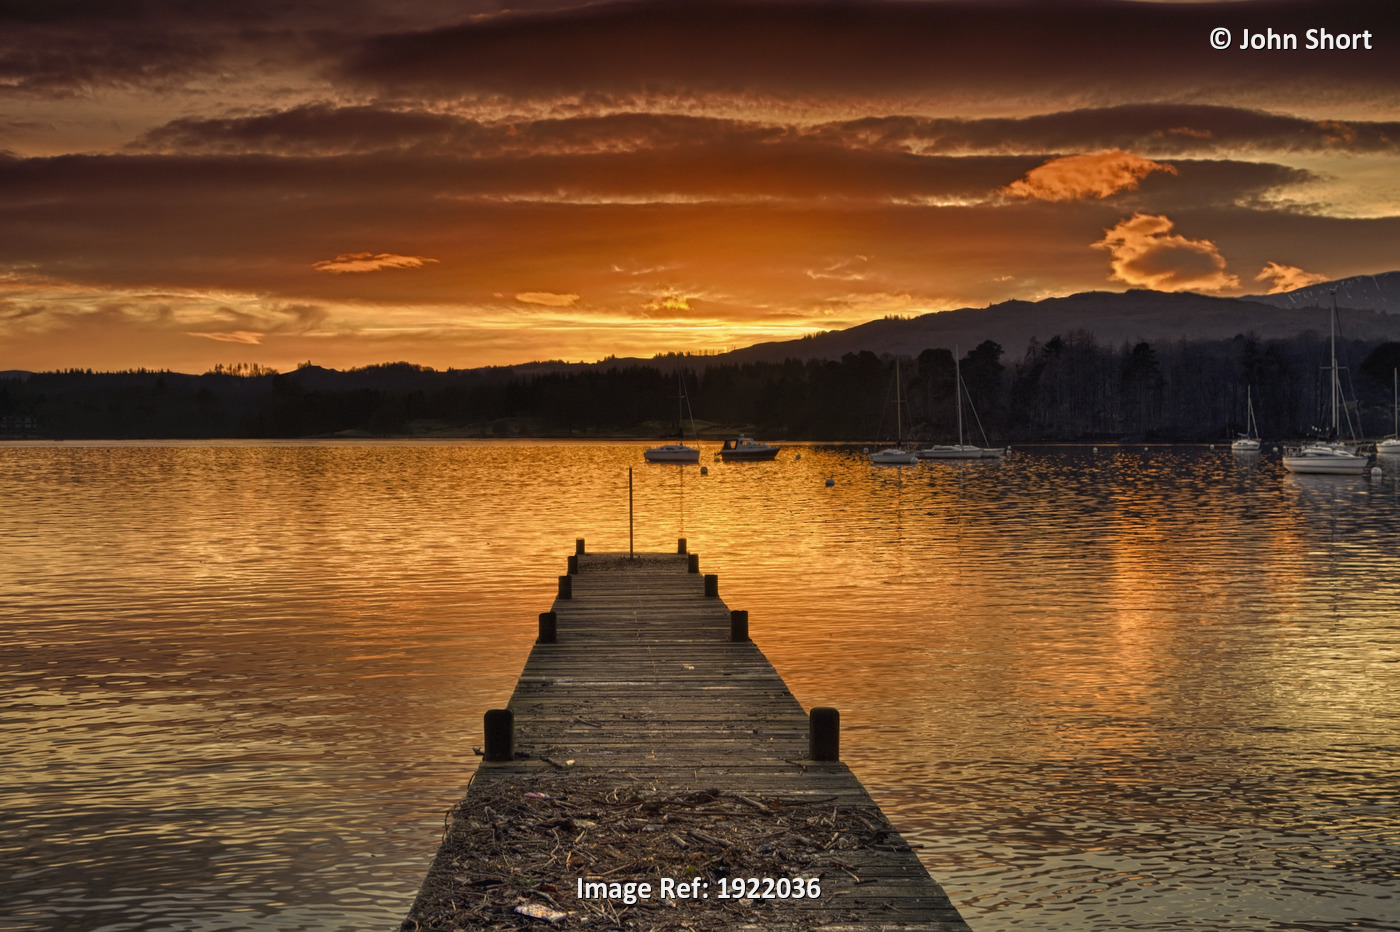 Dock On Lake Windermere At Sunset; Ambleside, Cumbria, England